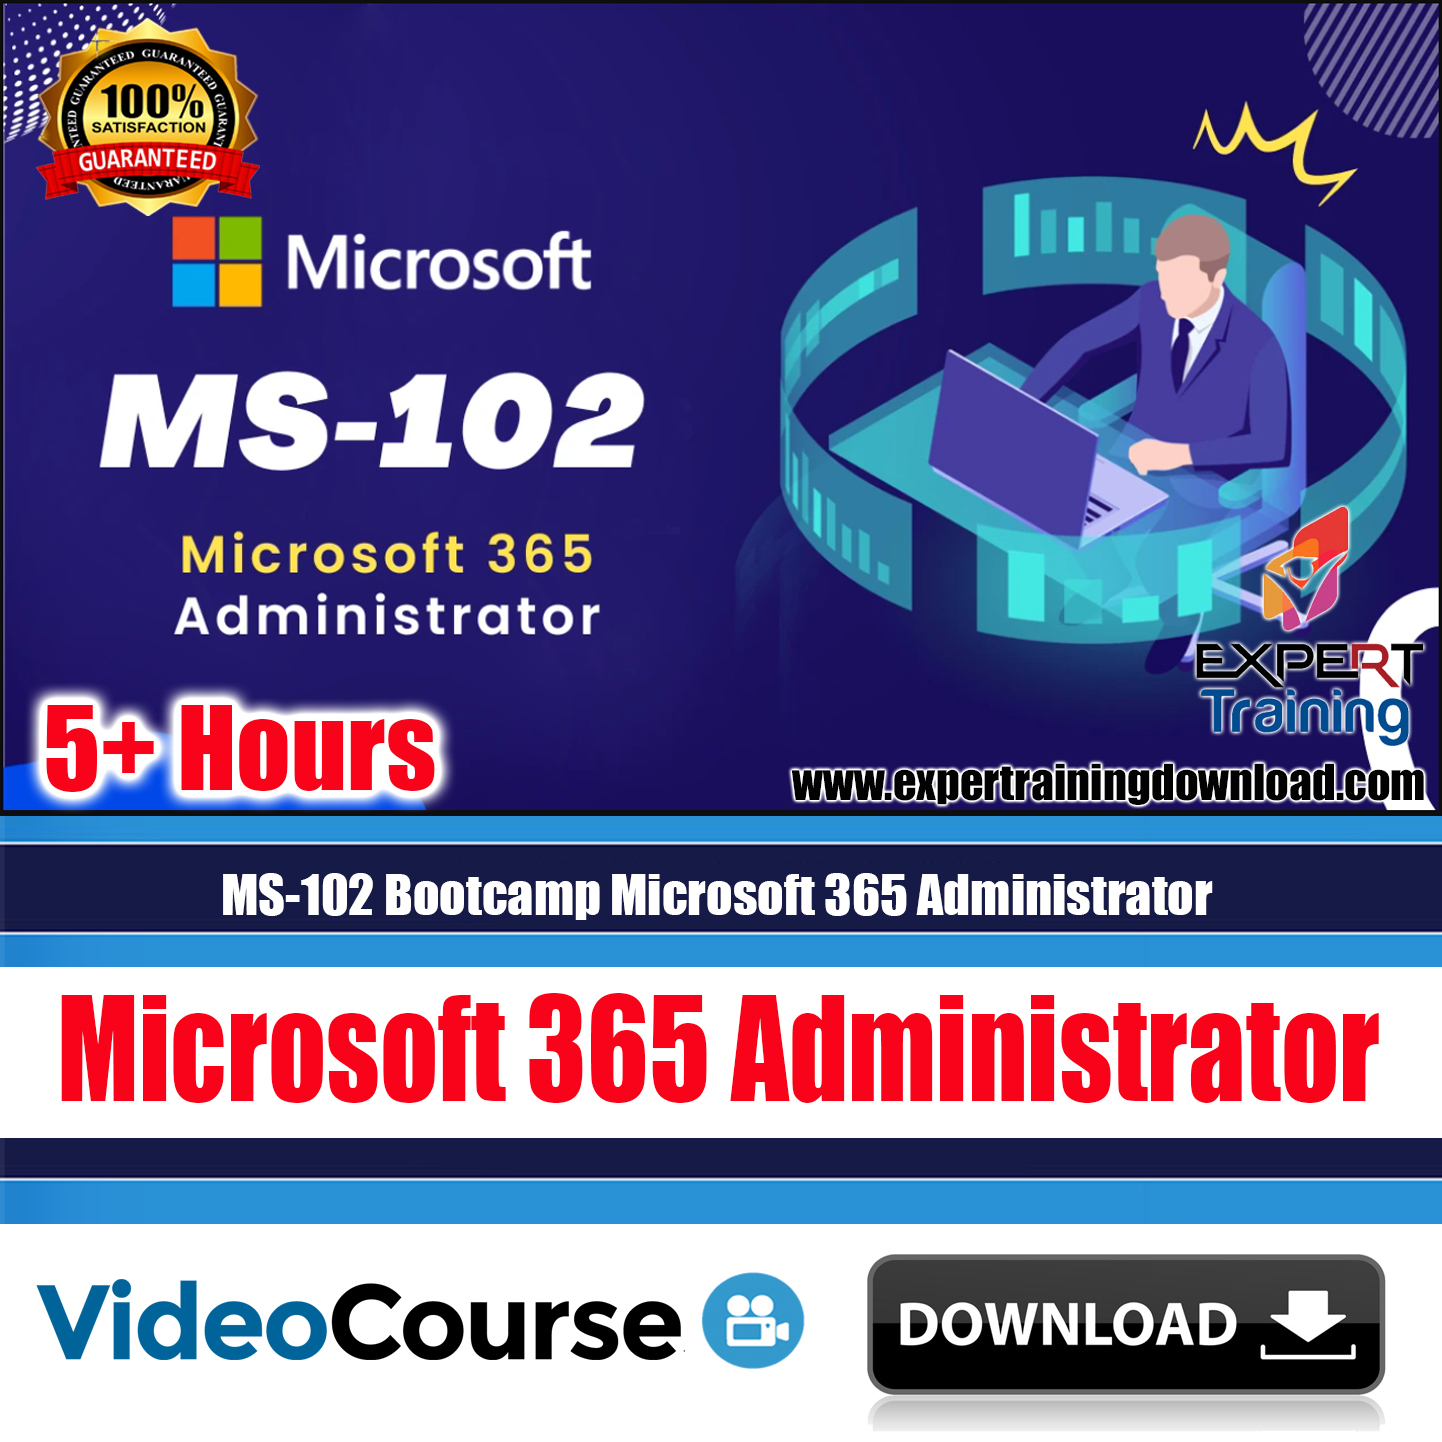 MS-102 Bootcamp Microsoft 365 Administrator